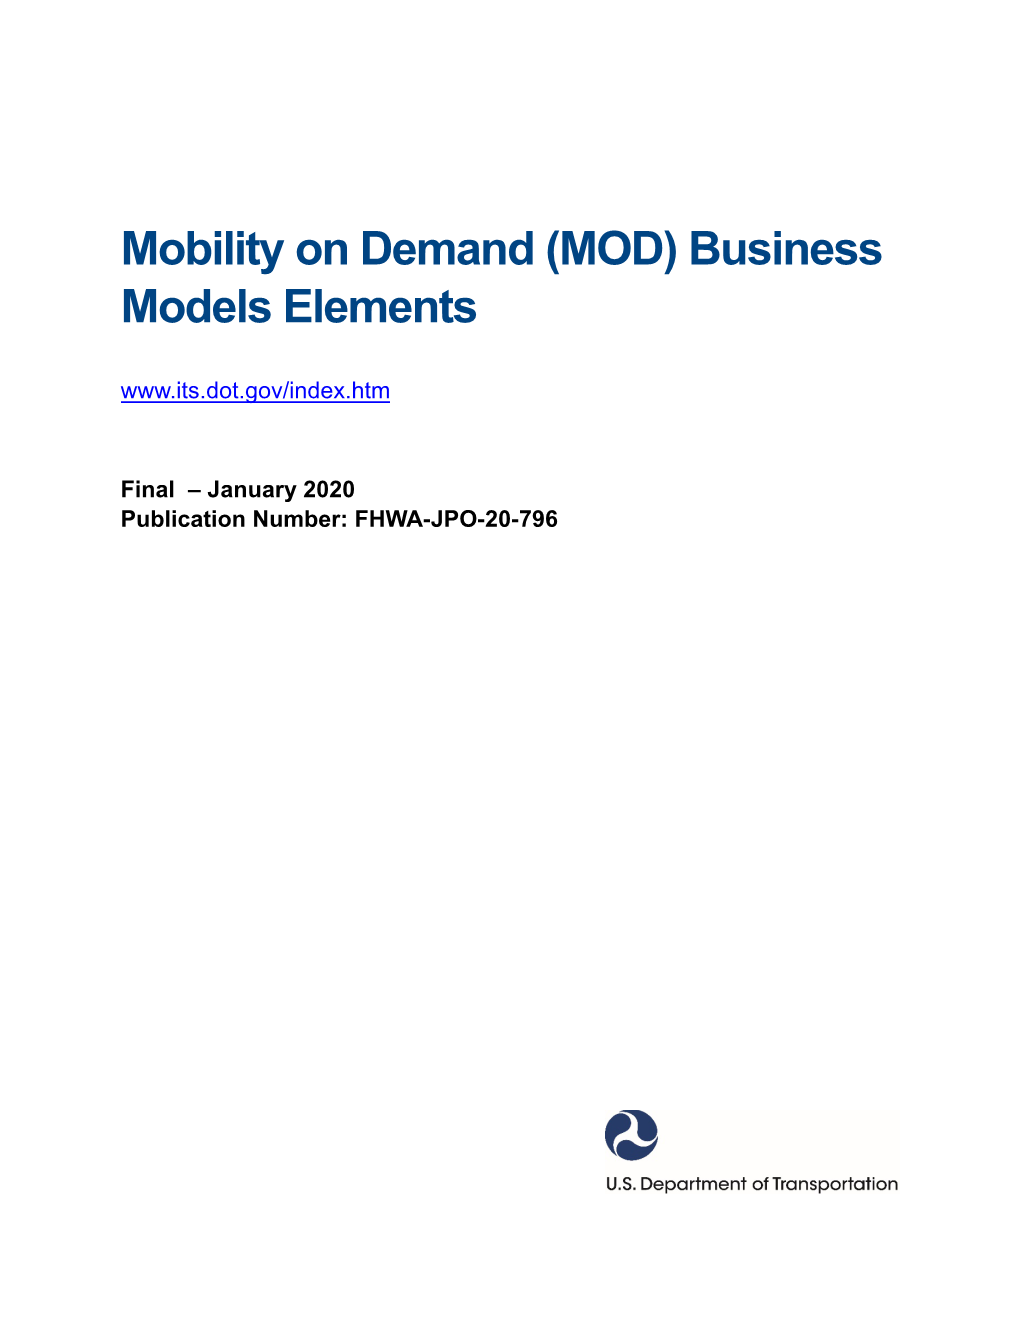 Business Models Elements